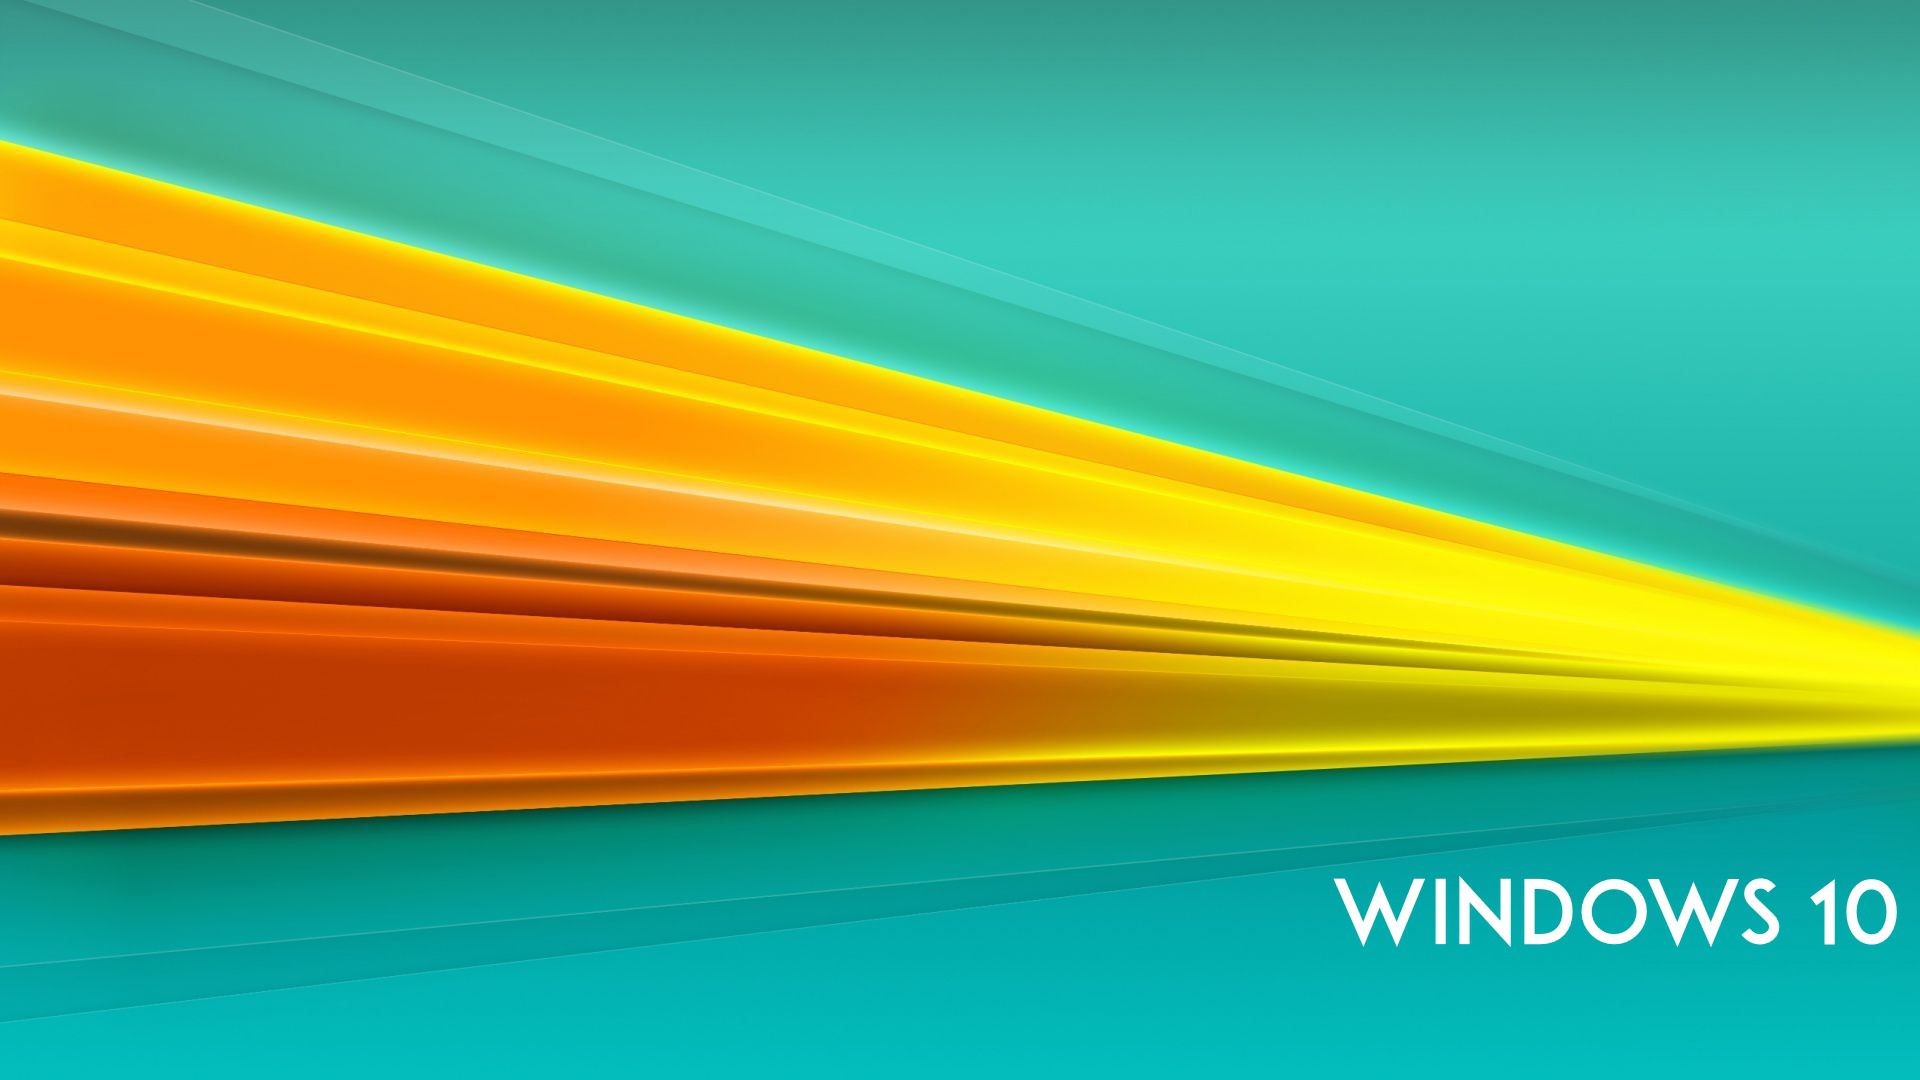 1920x1080 Flaming Line Windows 10 Wallpaper - Windows 10 logo HD .